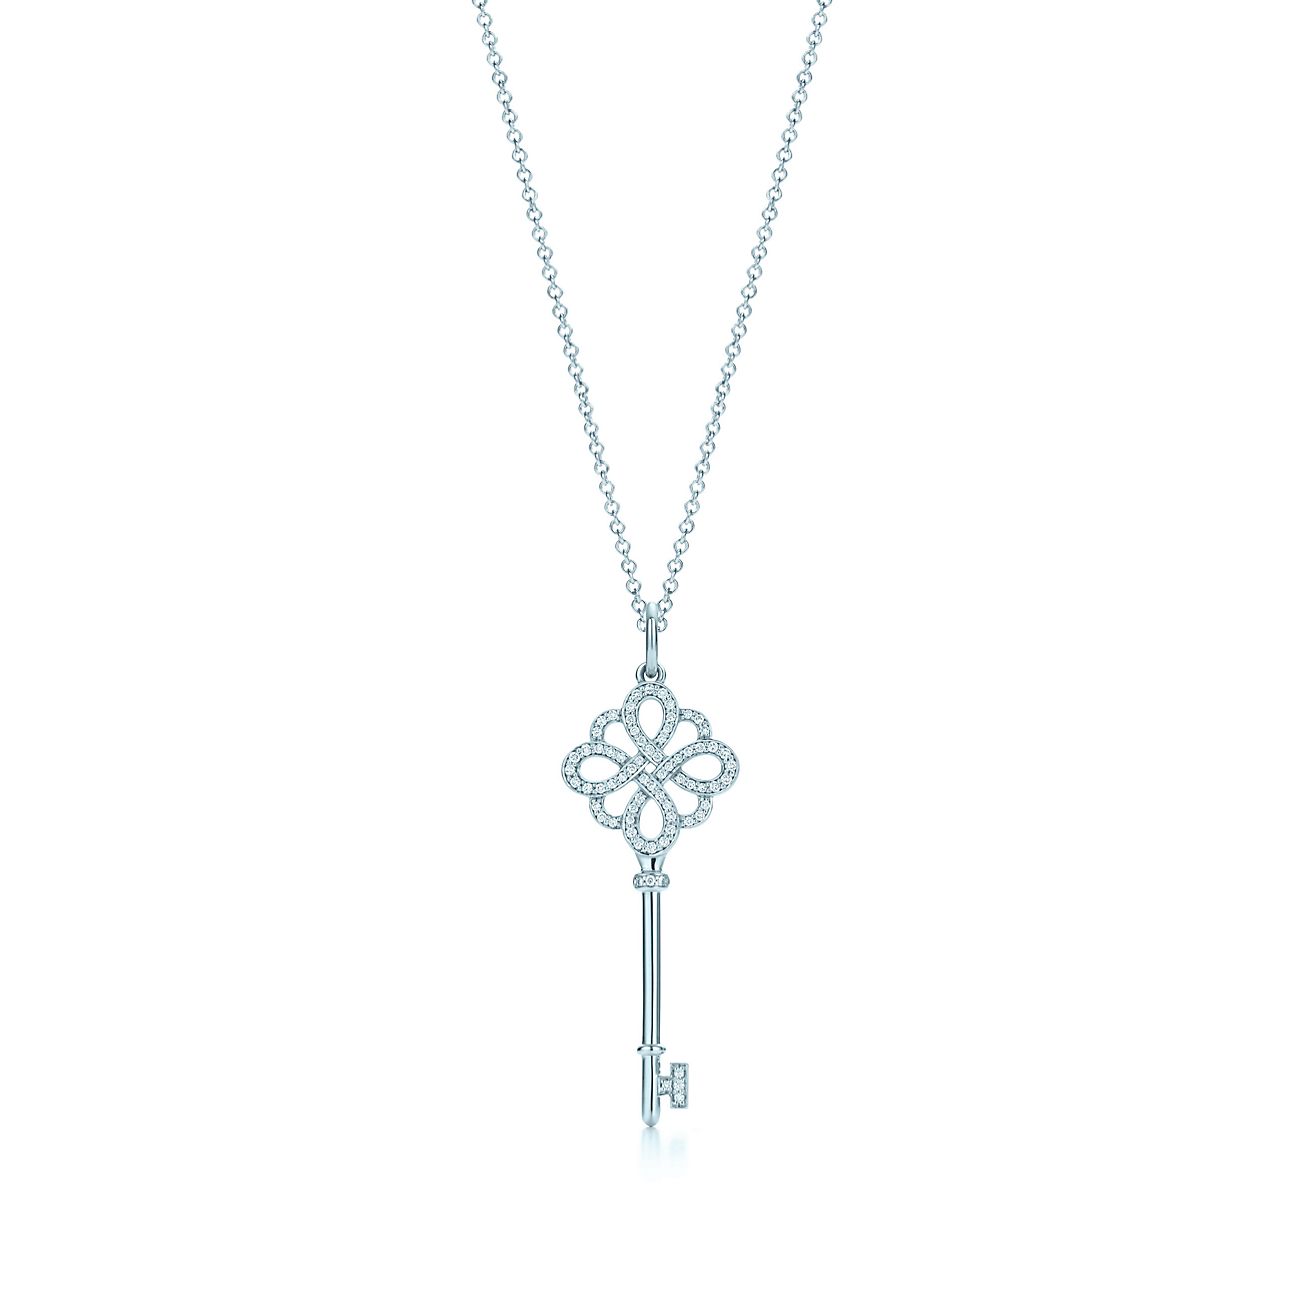 Tiffany & Co., Jewelry, Tiffany Key Necklace And Chain